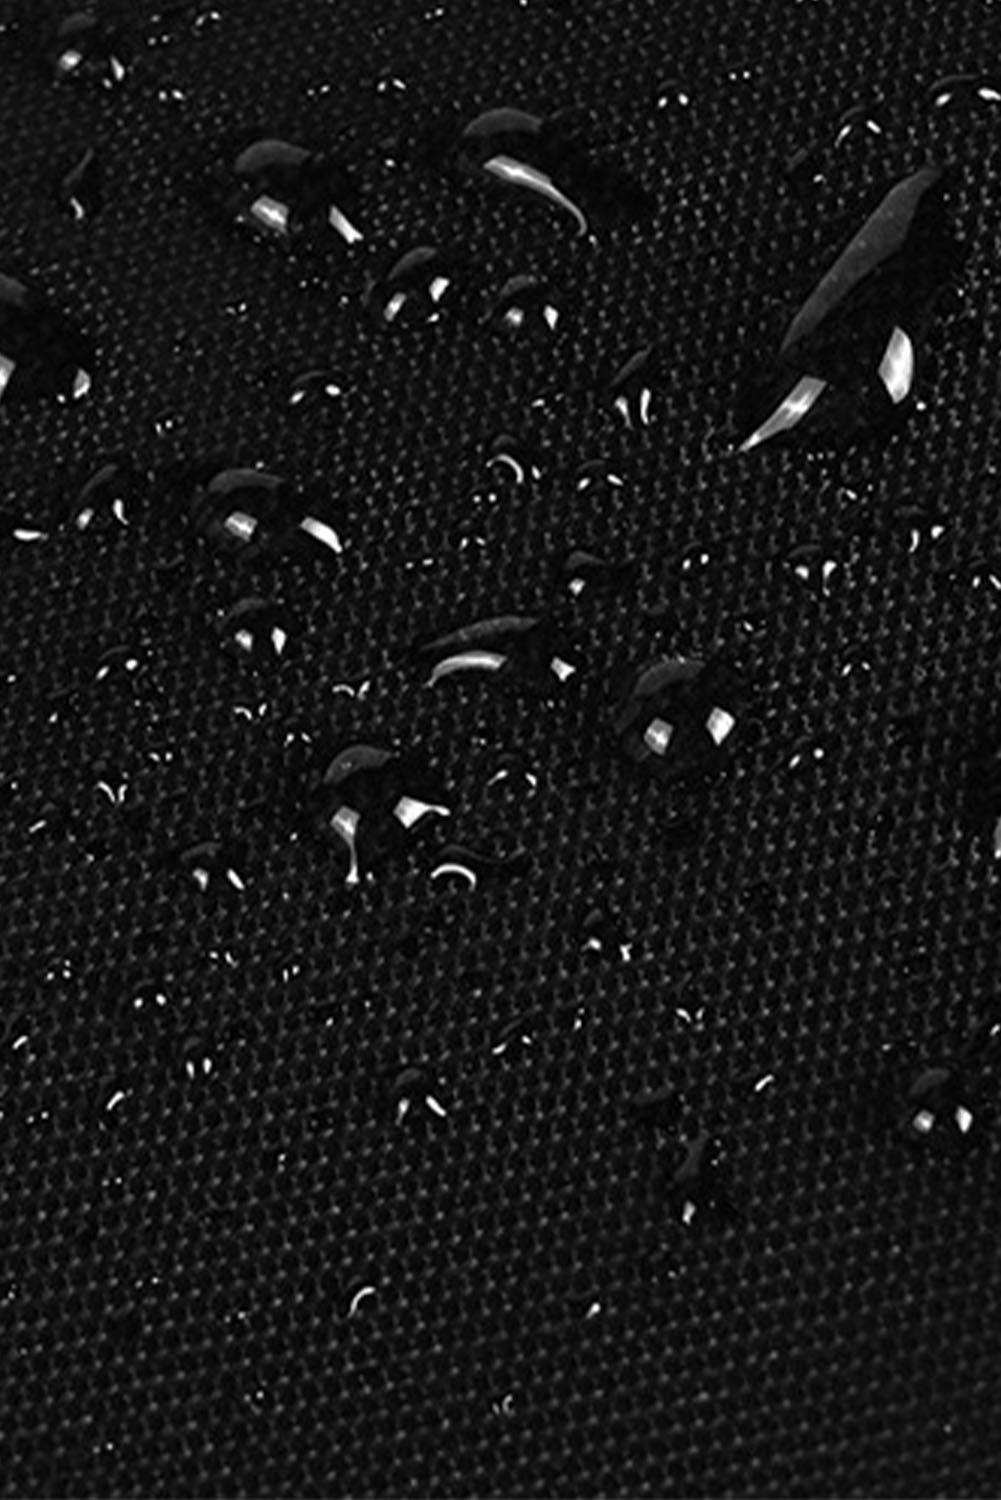 Black Waterproof Zipped Fanny Pack Crossbody Sling Bag